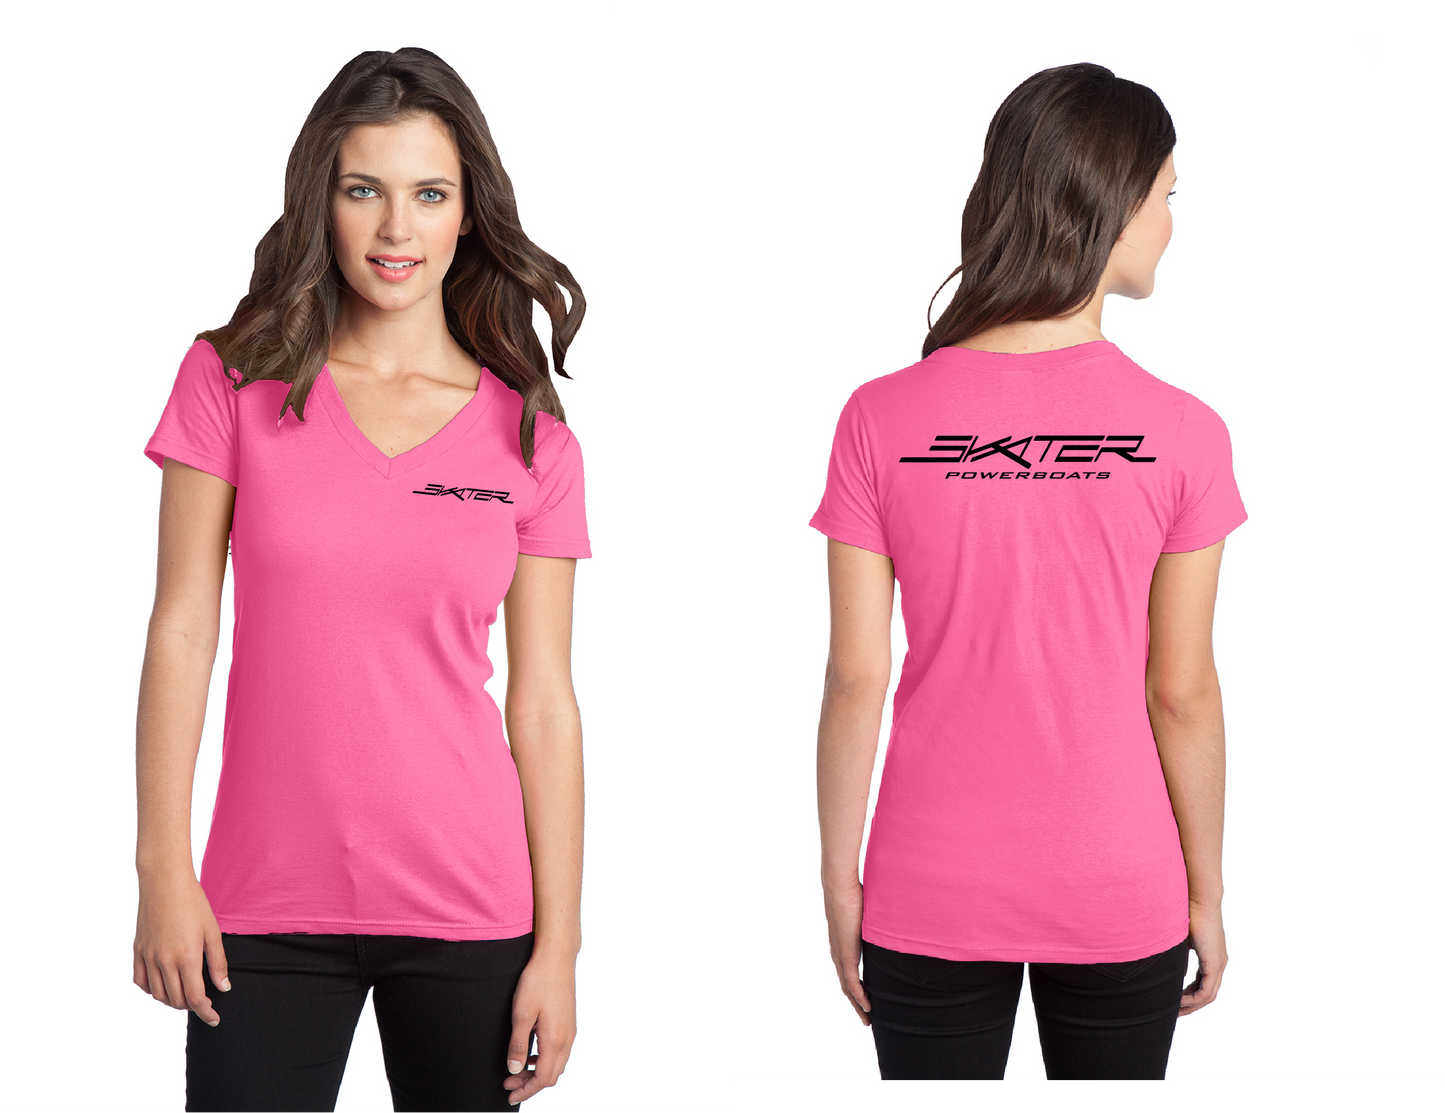 Neon Pink V-Neck T-Shirt